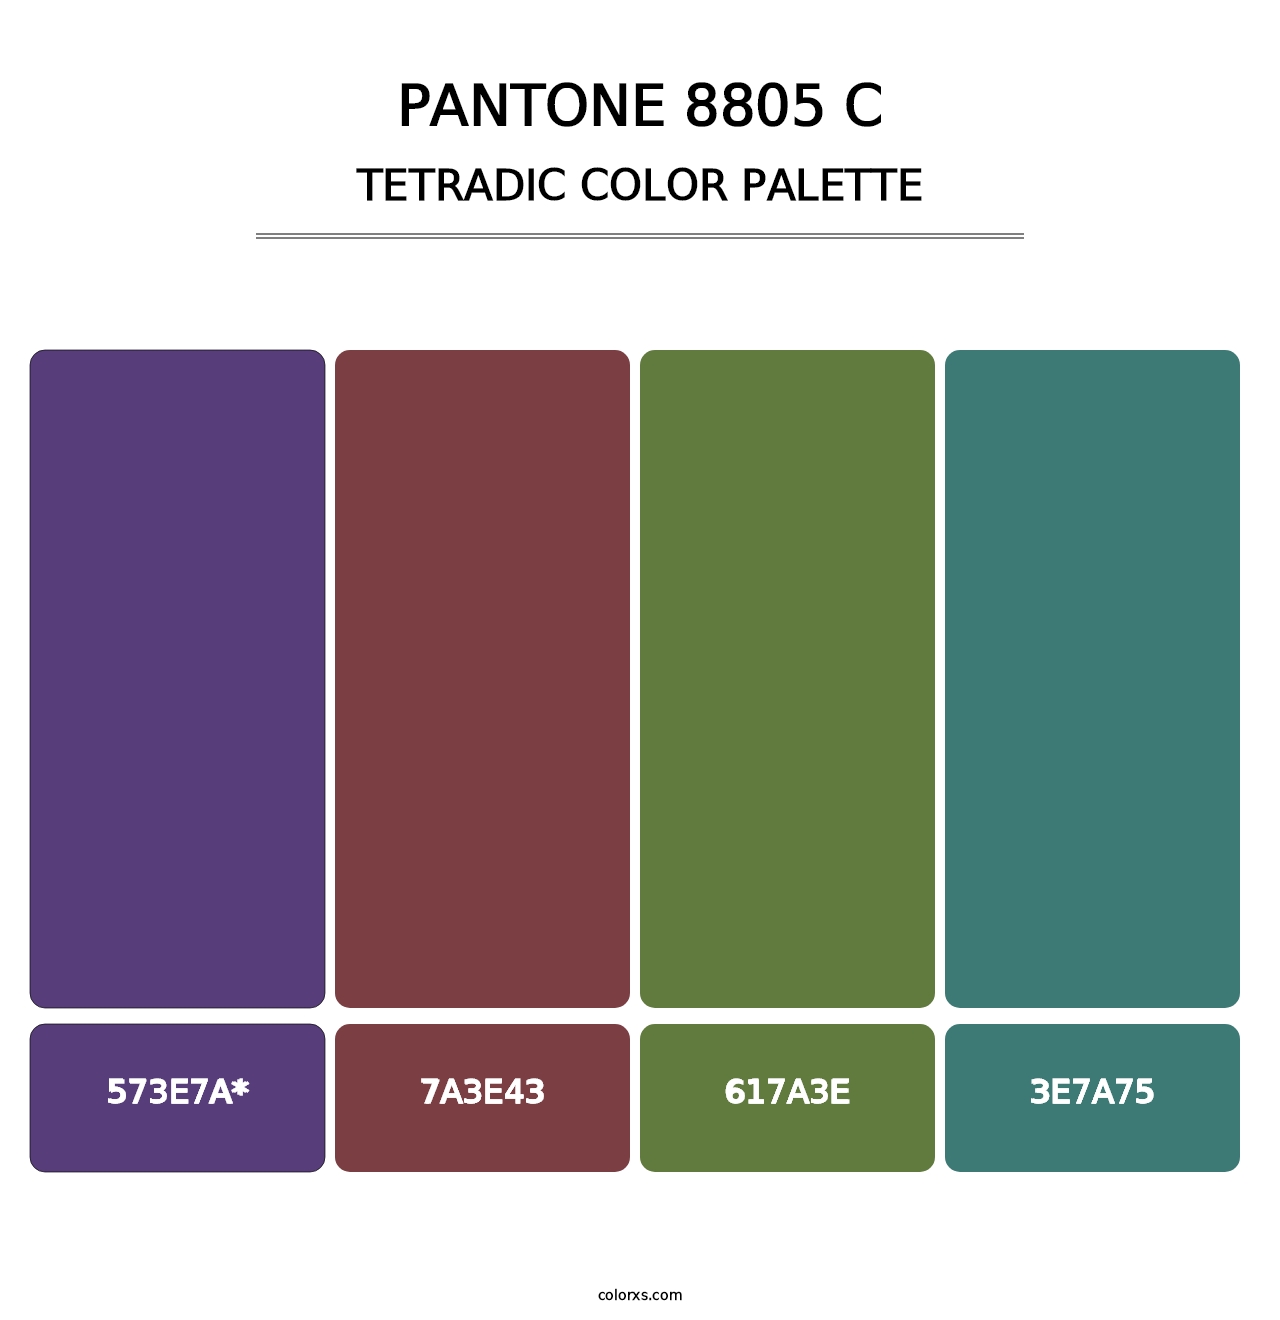 PANTONE 8805 C - Tetradic Color Palette